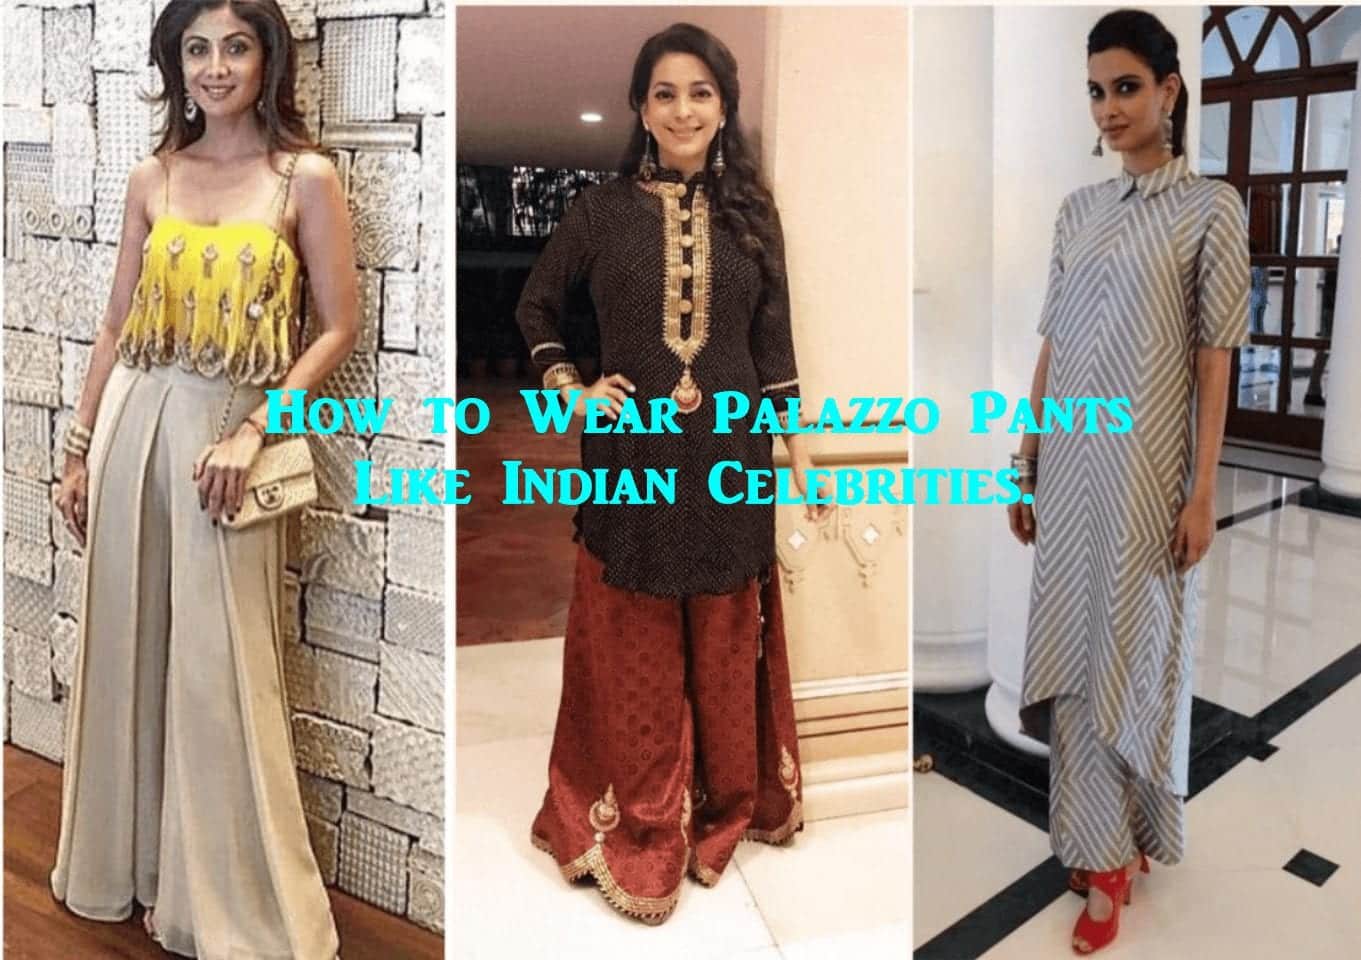 Indian Celebrities In Palazzo Pants- 25 Ways To Wear Palazzo Like Them